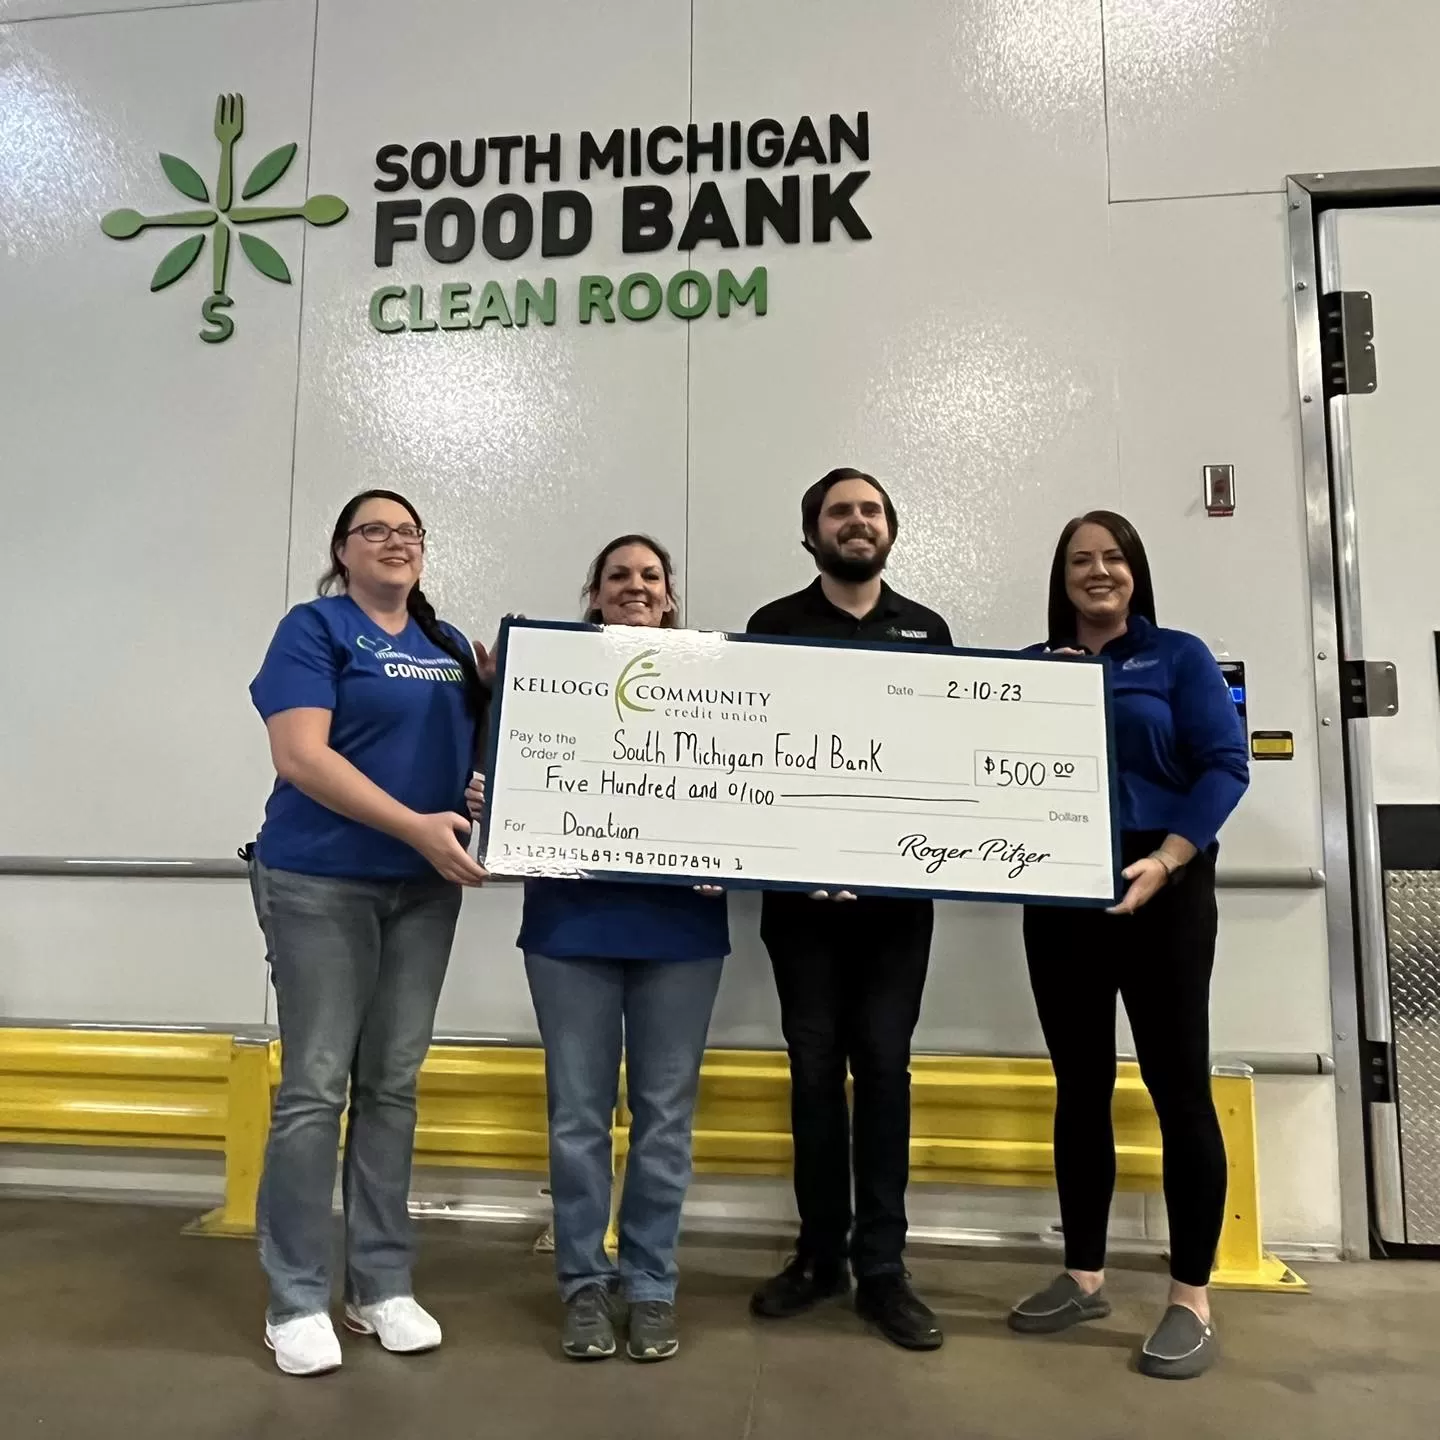 KCCU team presents check to South Michigan Food Bank